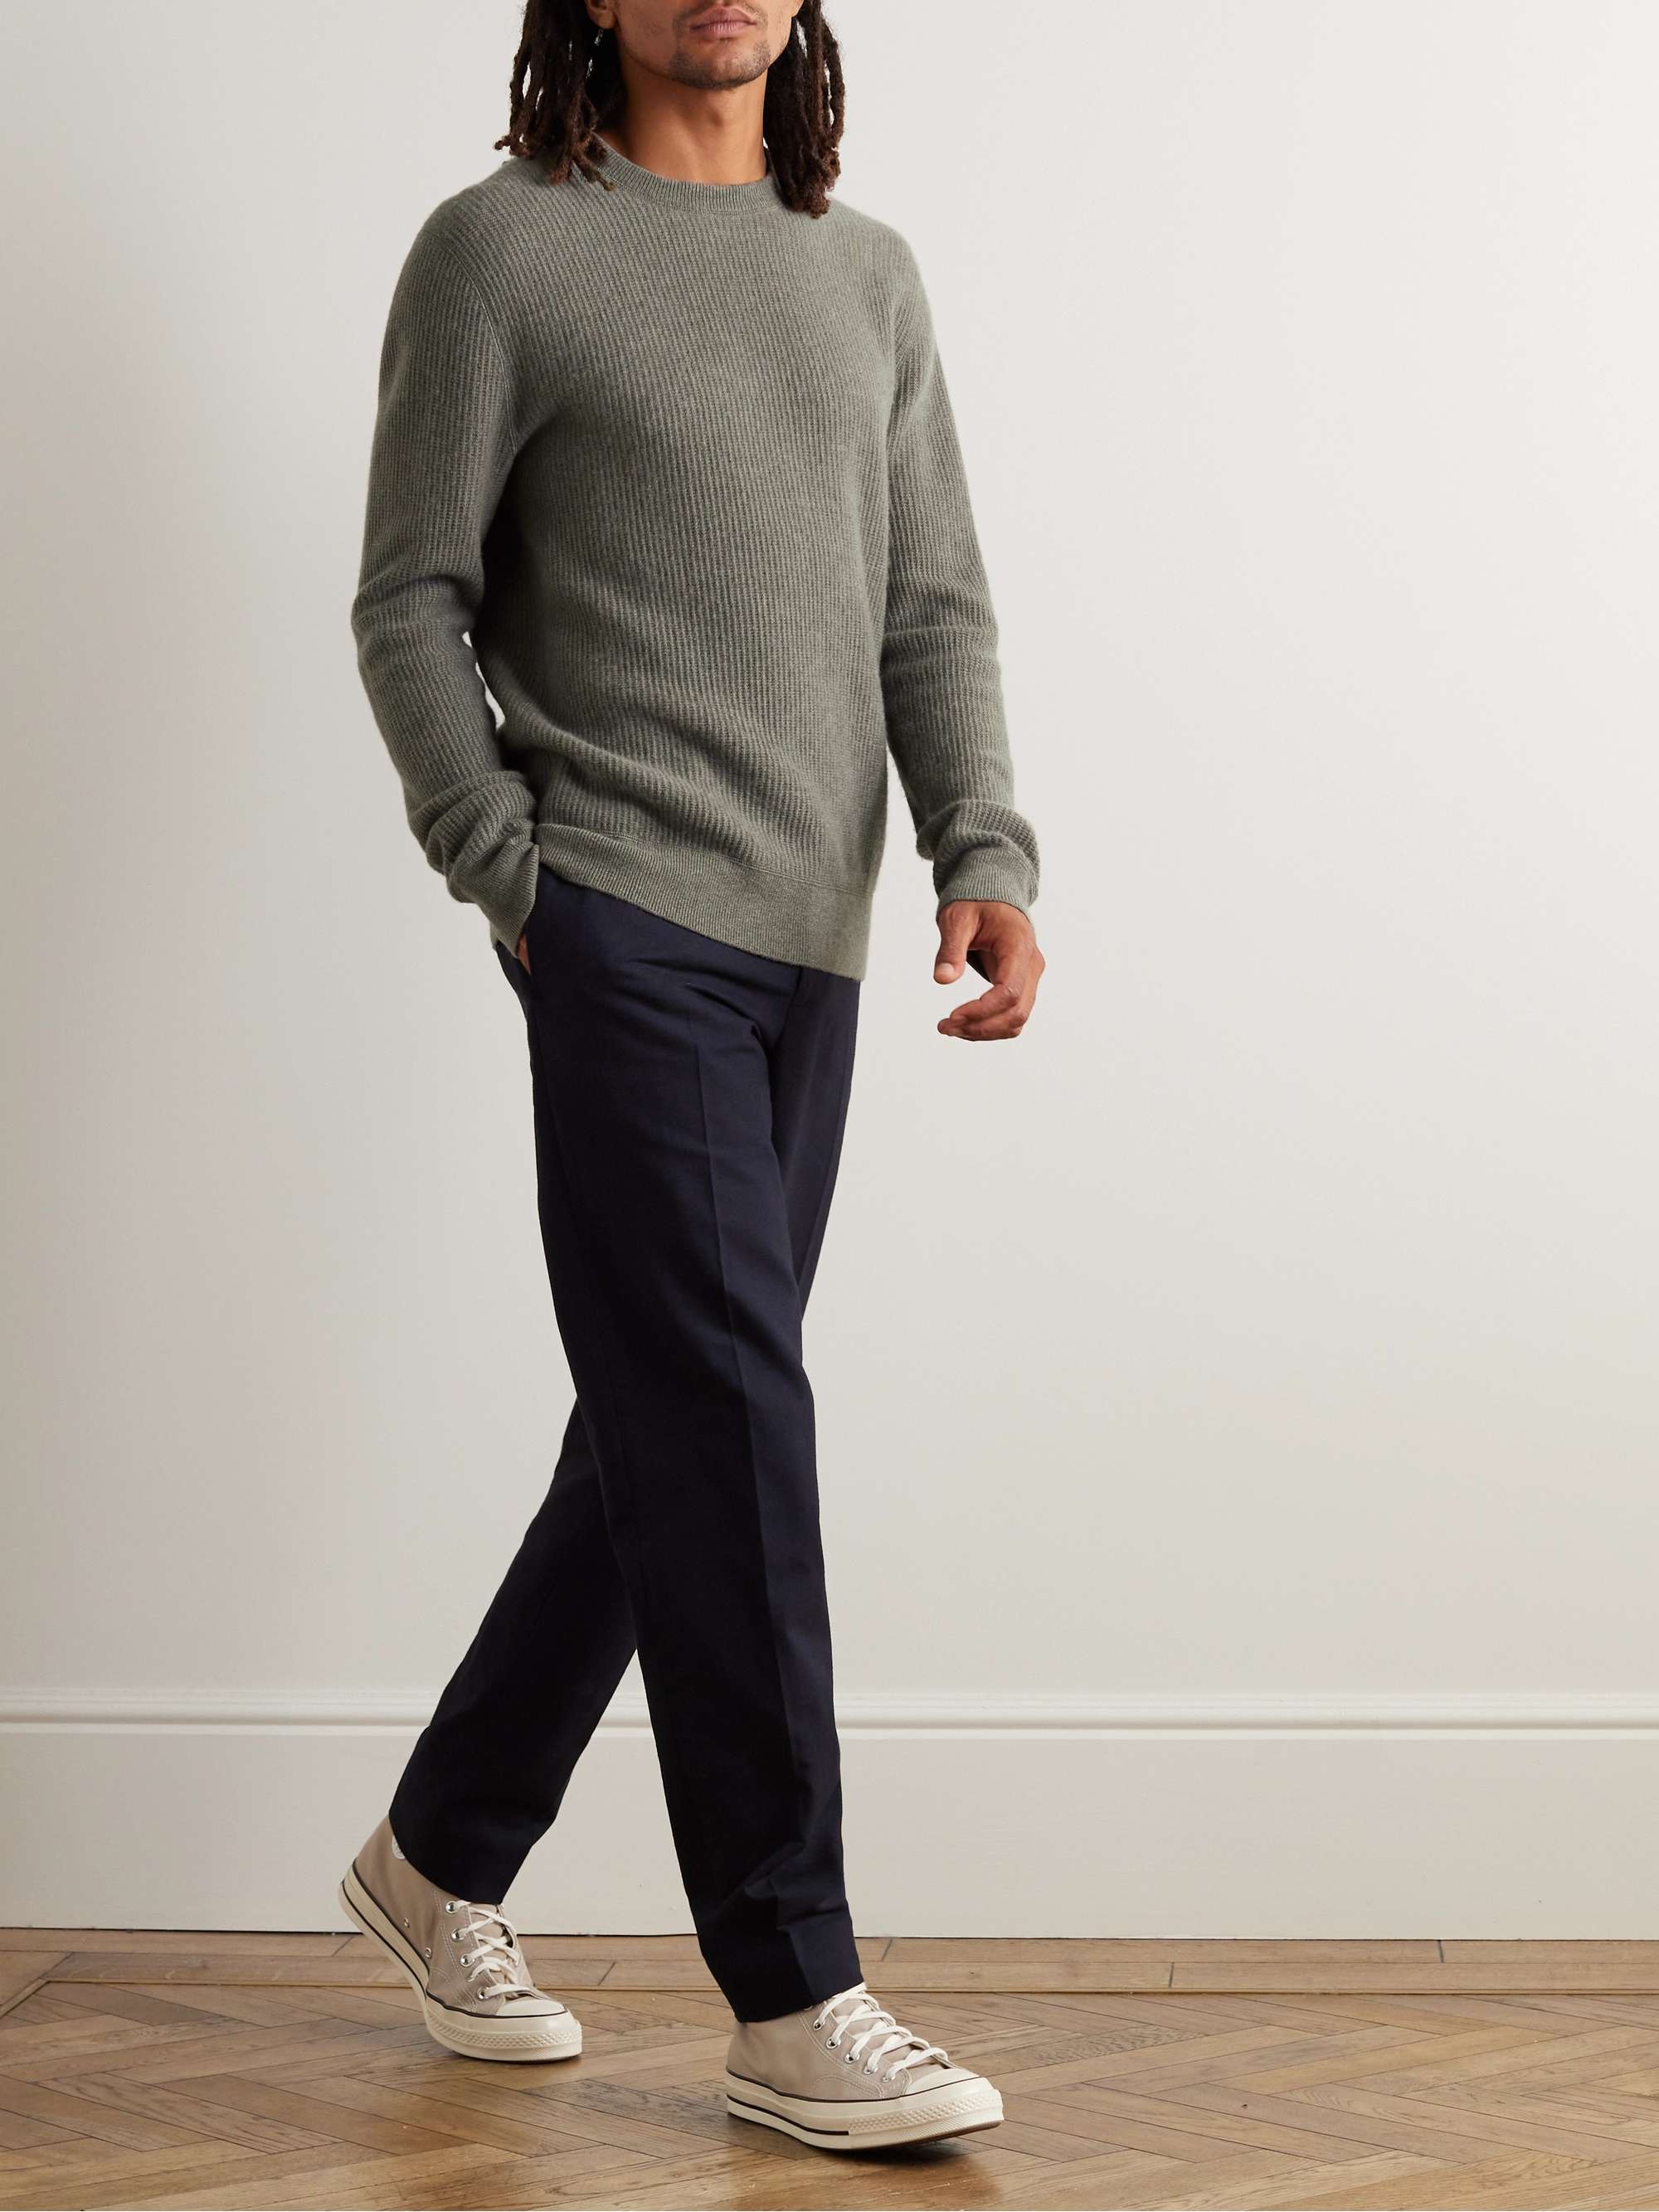 CLUB MONACO Ribbed Cashmere Sweater for Men | MR PORTER